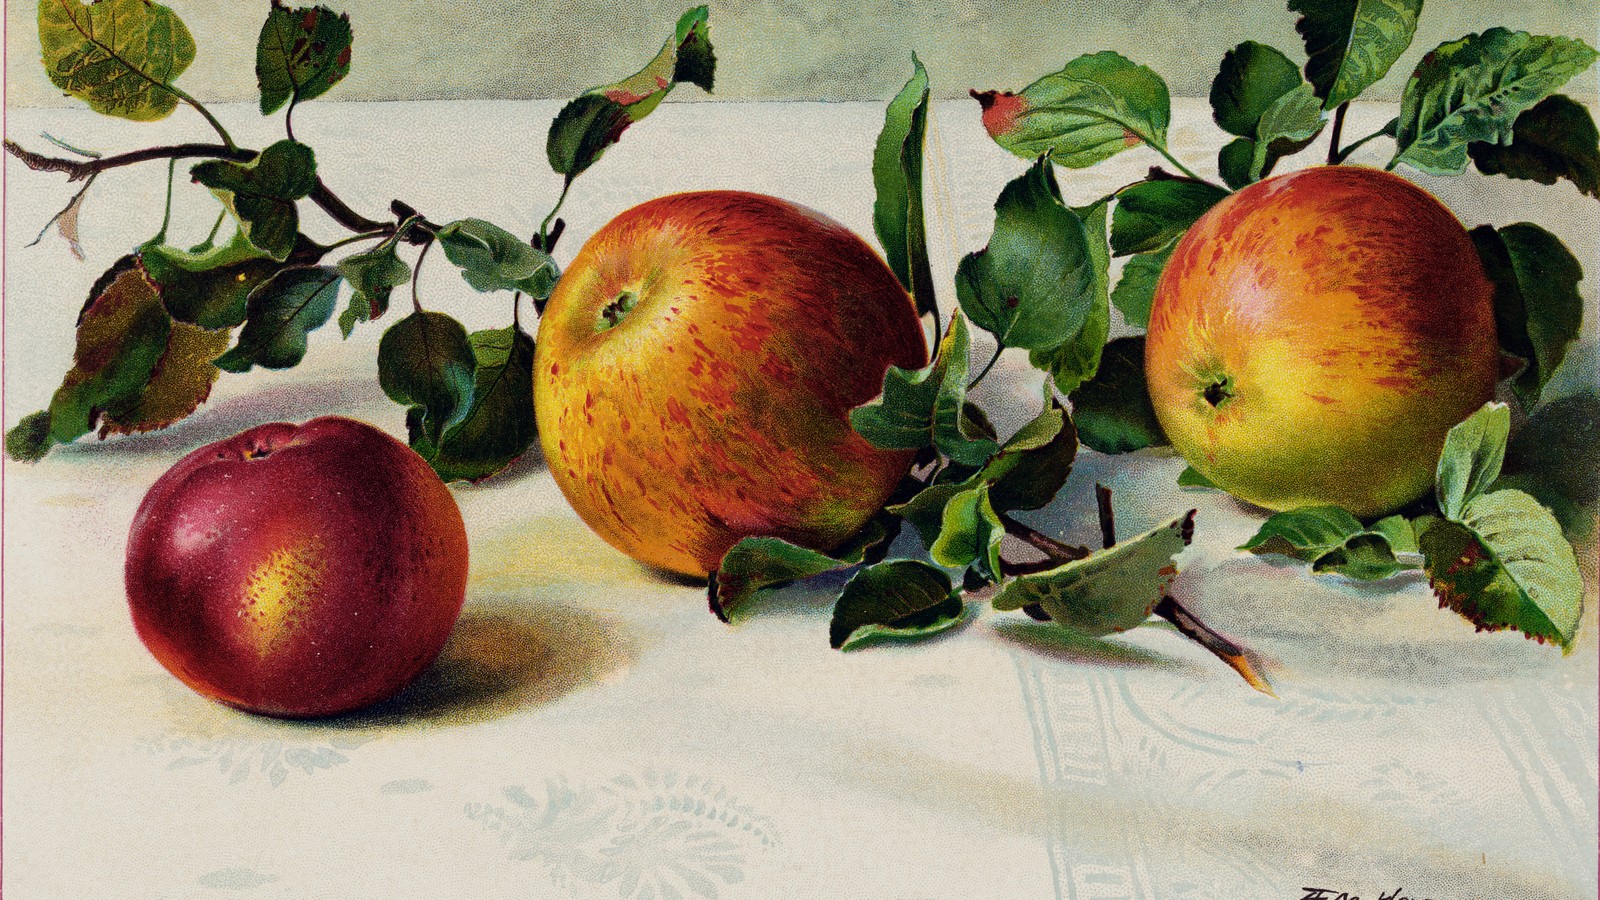 Apples in a Bushel: Exploring Apple Measurements